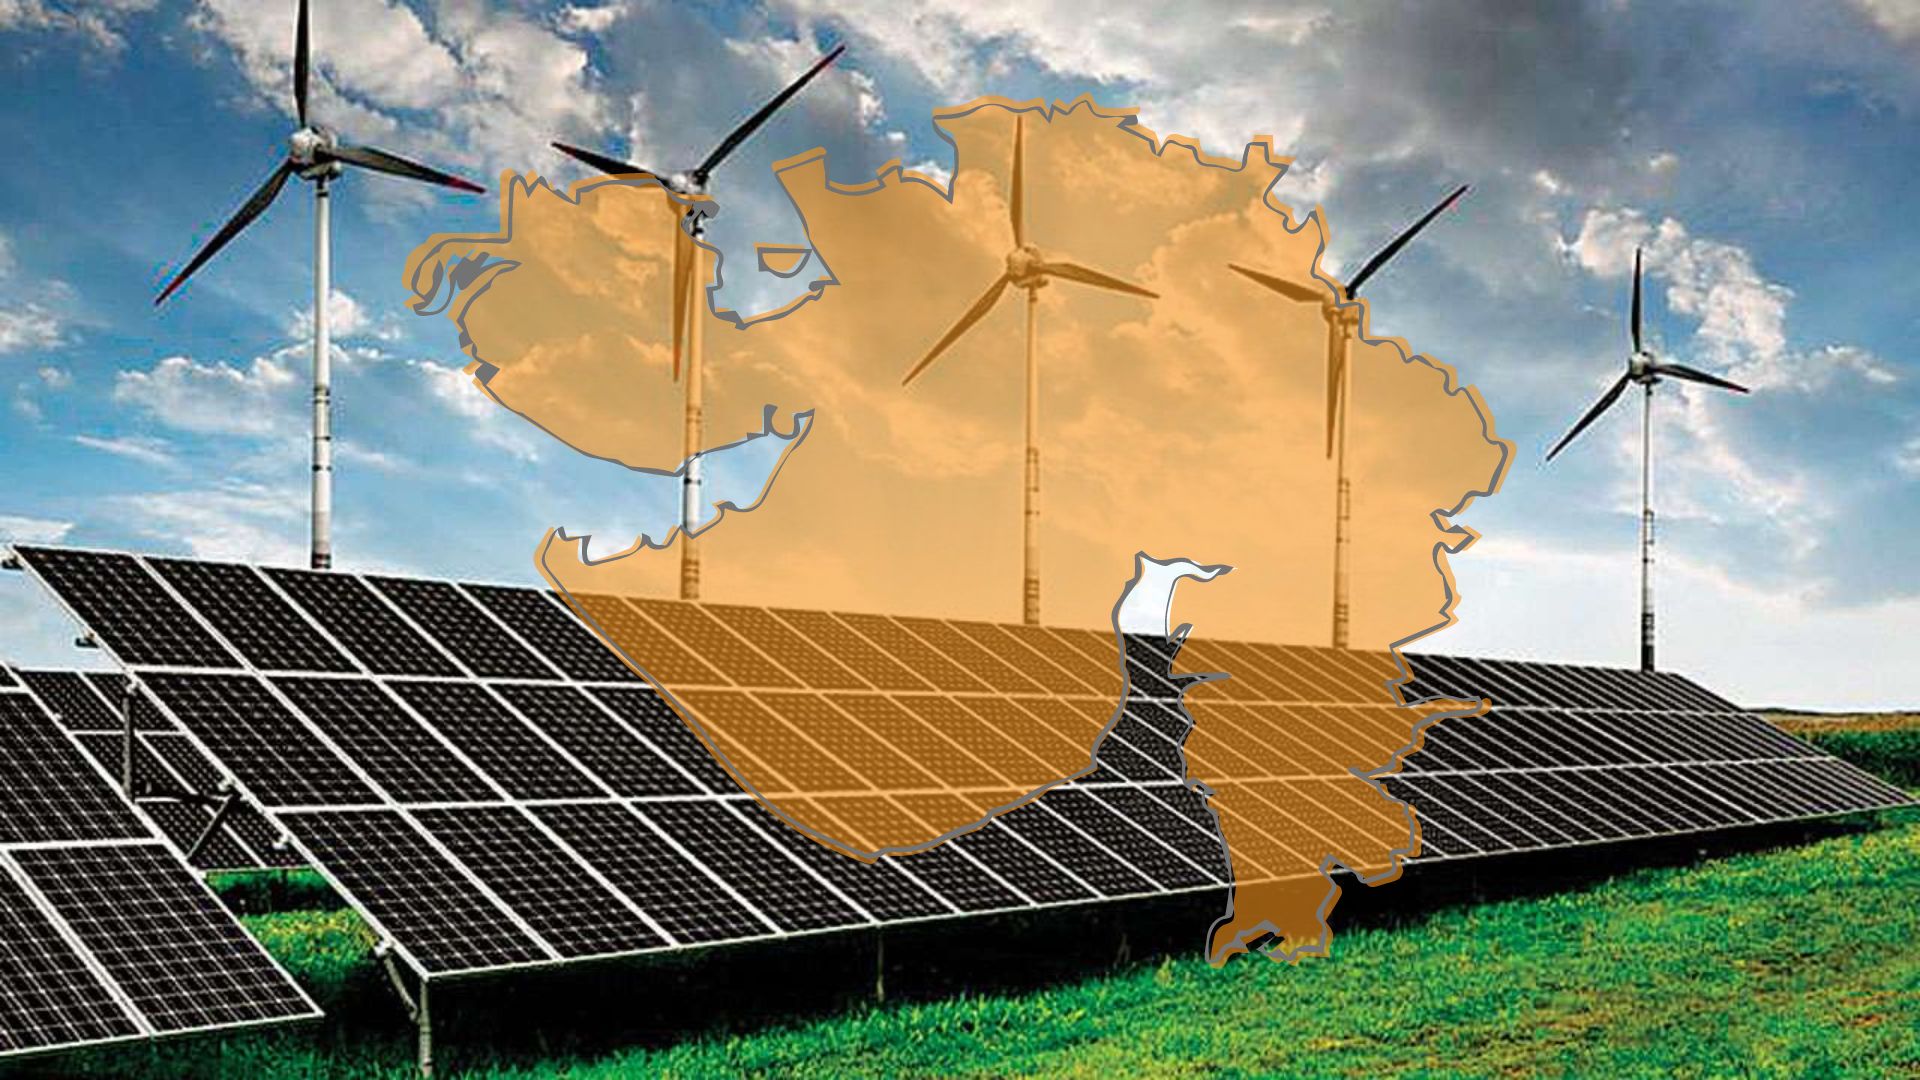 Gujarat receives 9 awards in field of Renewable energy